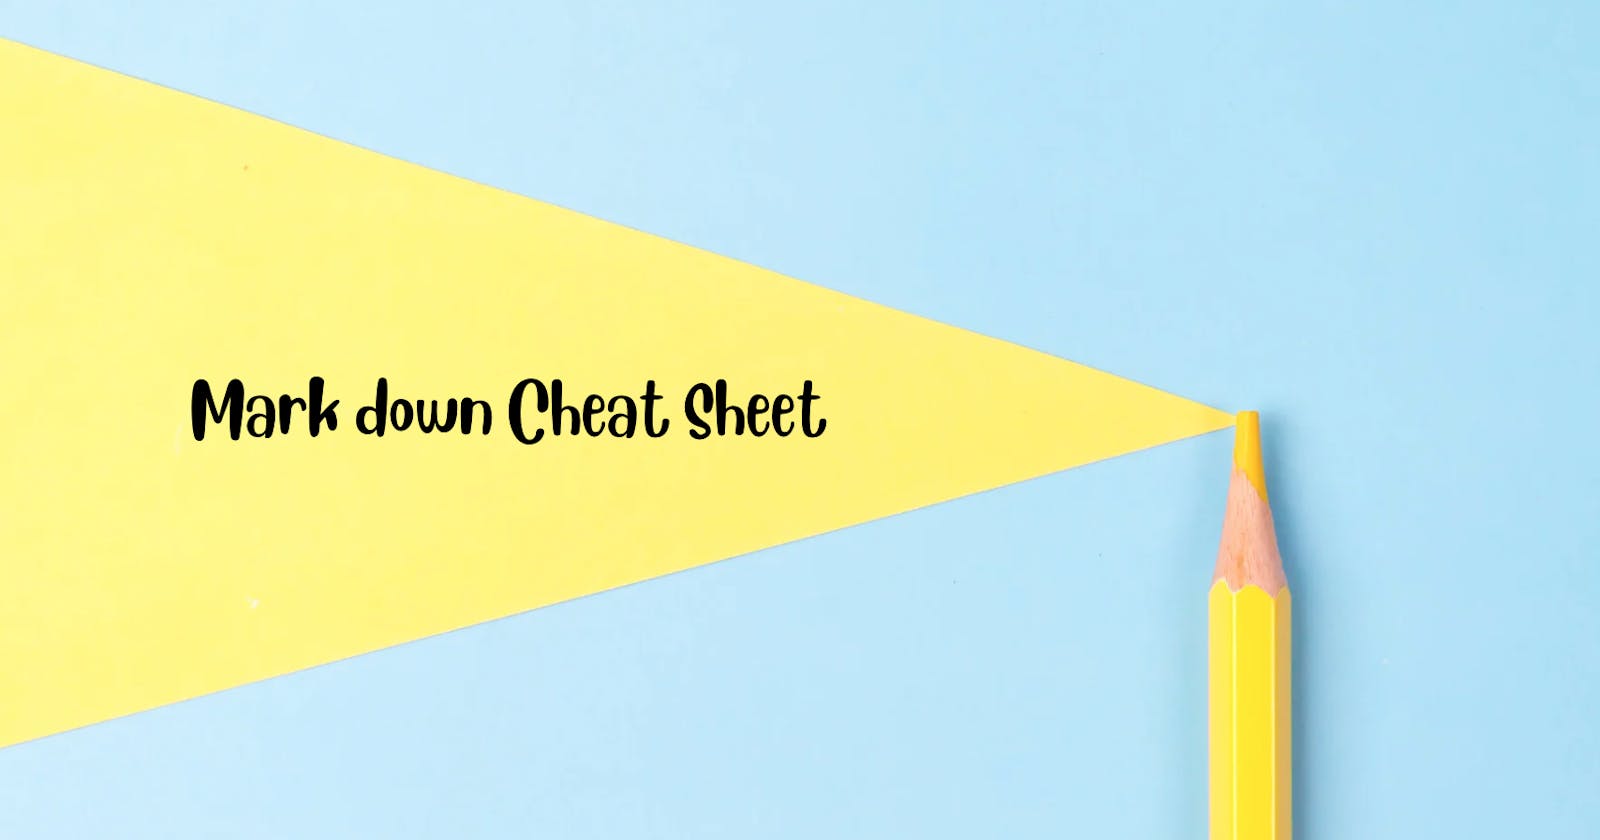 { Markdown Syntax }Cheat Sheet